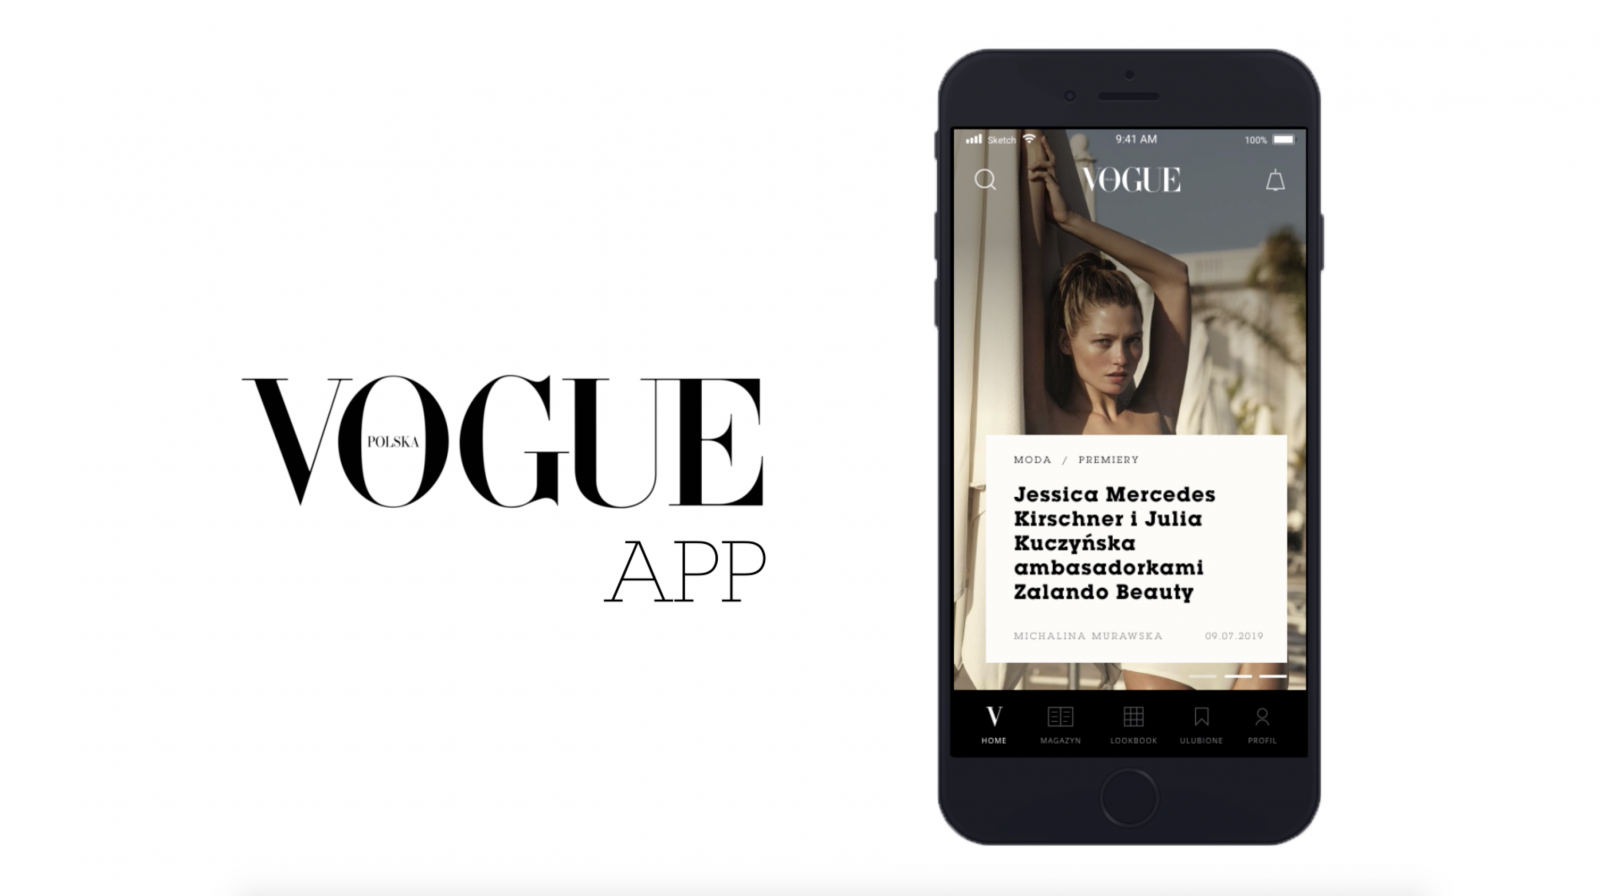 Vogue Polska App